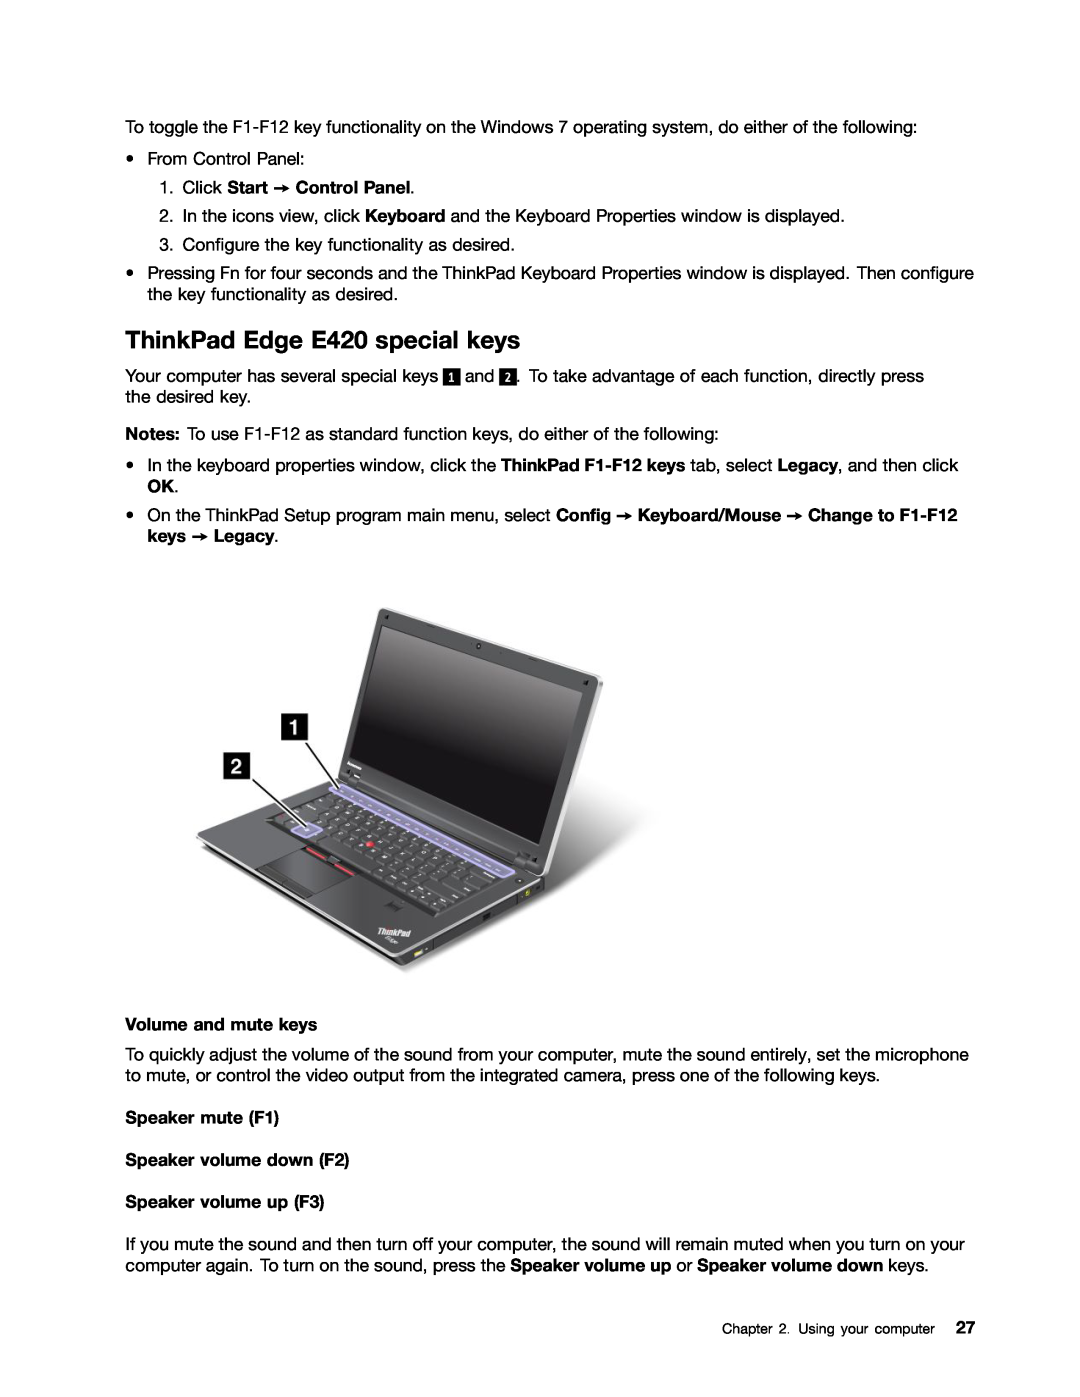 Lenovo E520, 114155U manual ThinkPad Edge E420 special keys, Click Start Control Panel, Volume and mute keys 